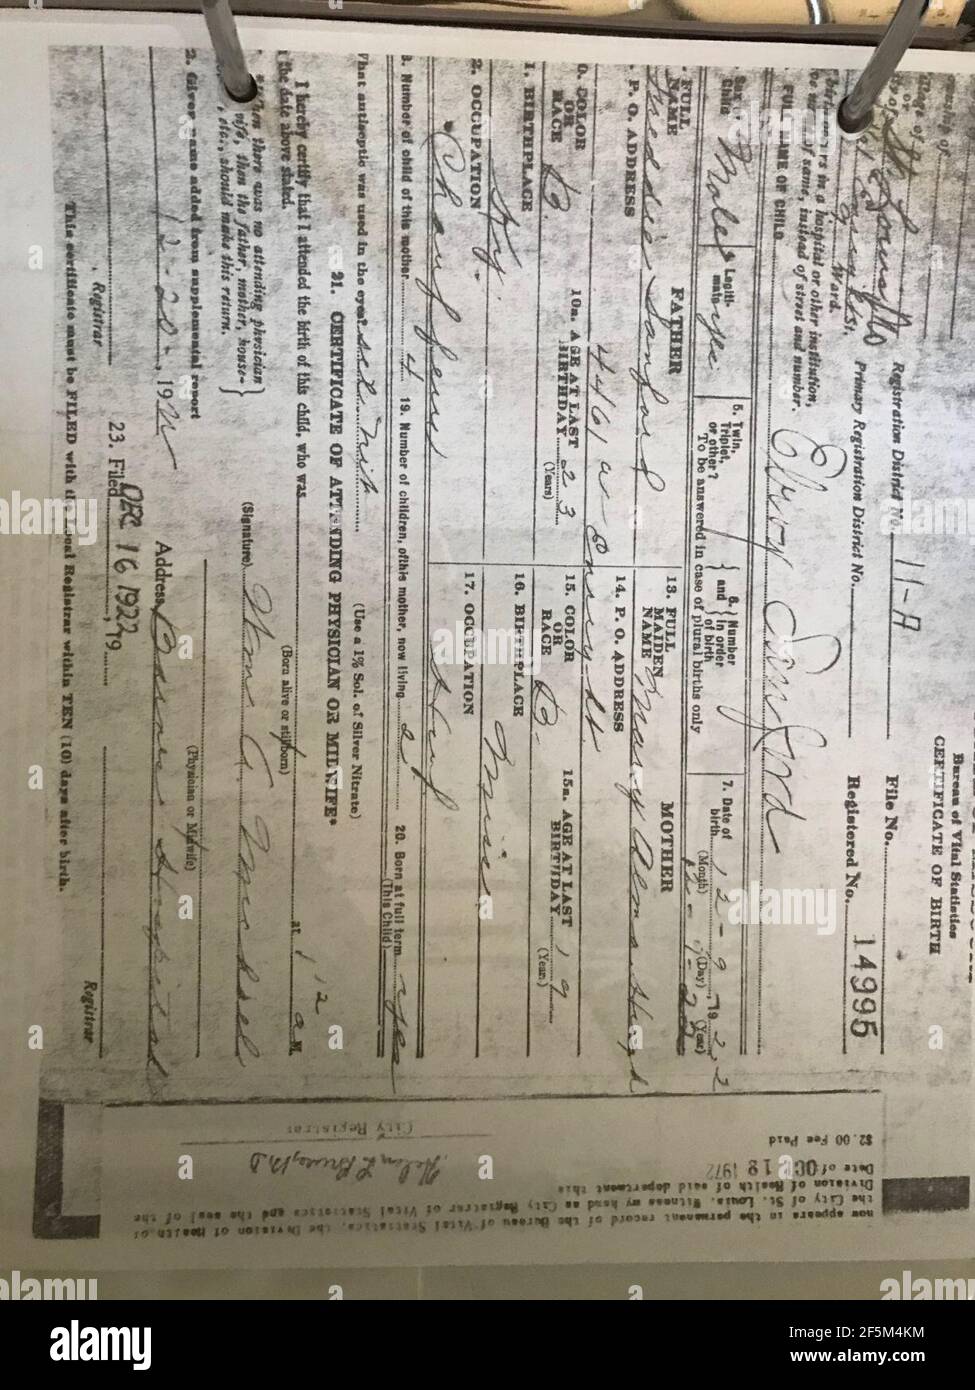 Redd Foxx 1922 Birth Certificate - View 2. Stock Photo